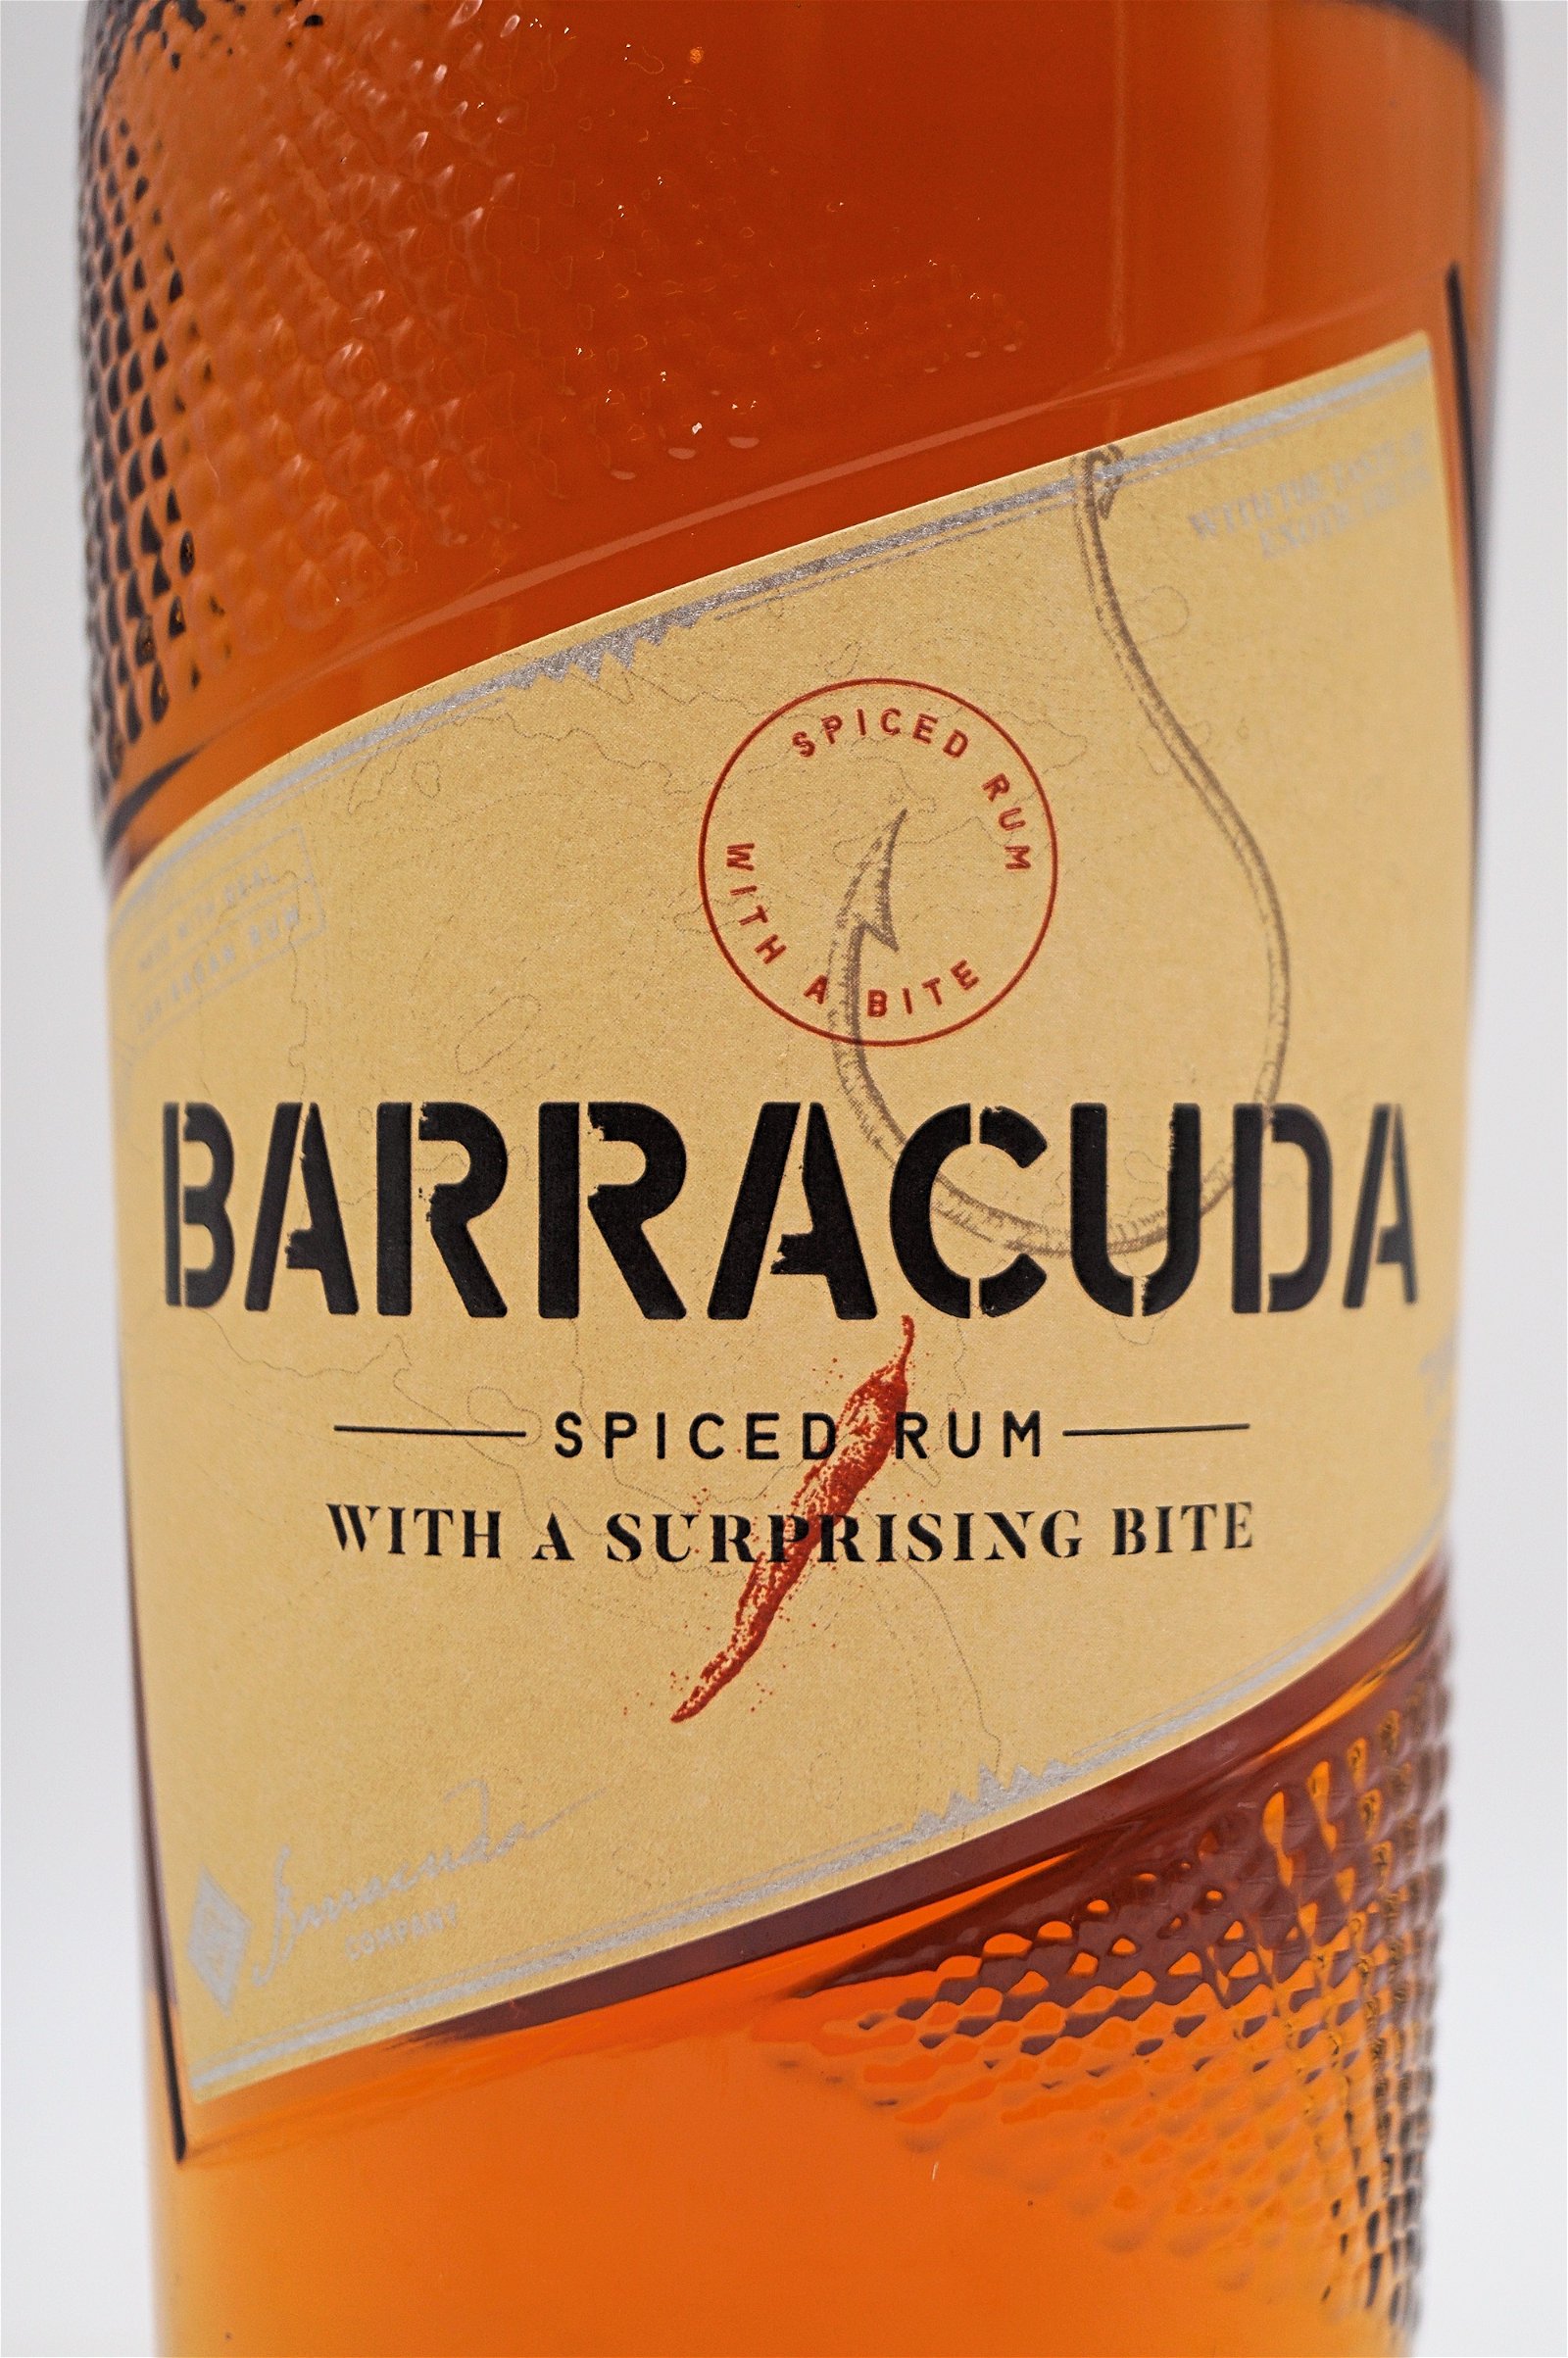 Barracuda Spiced Rum